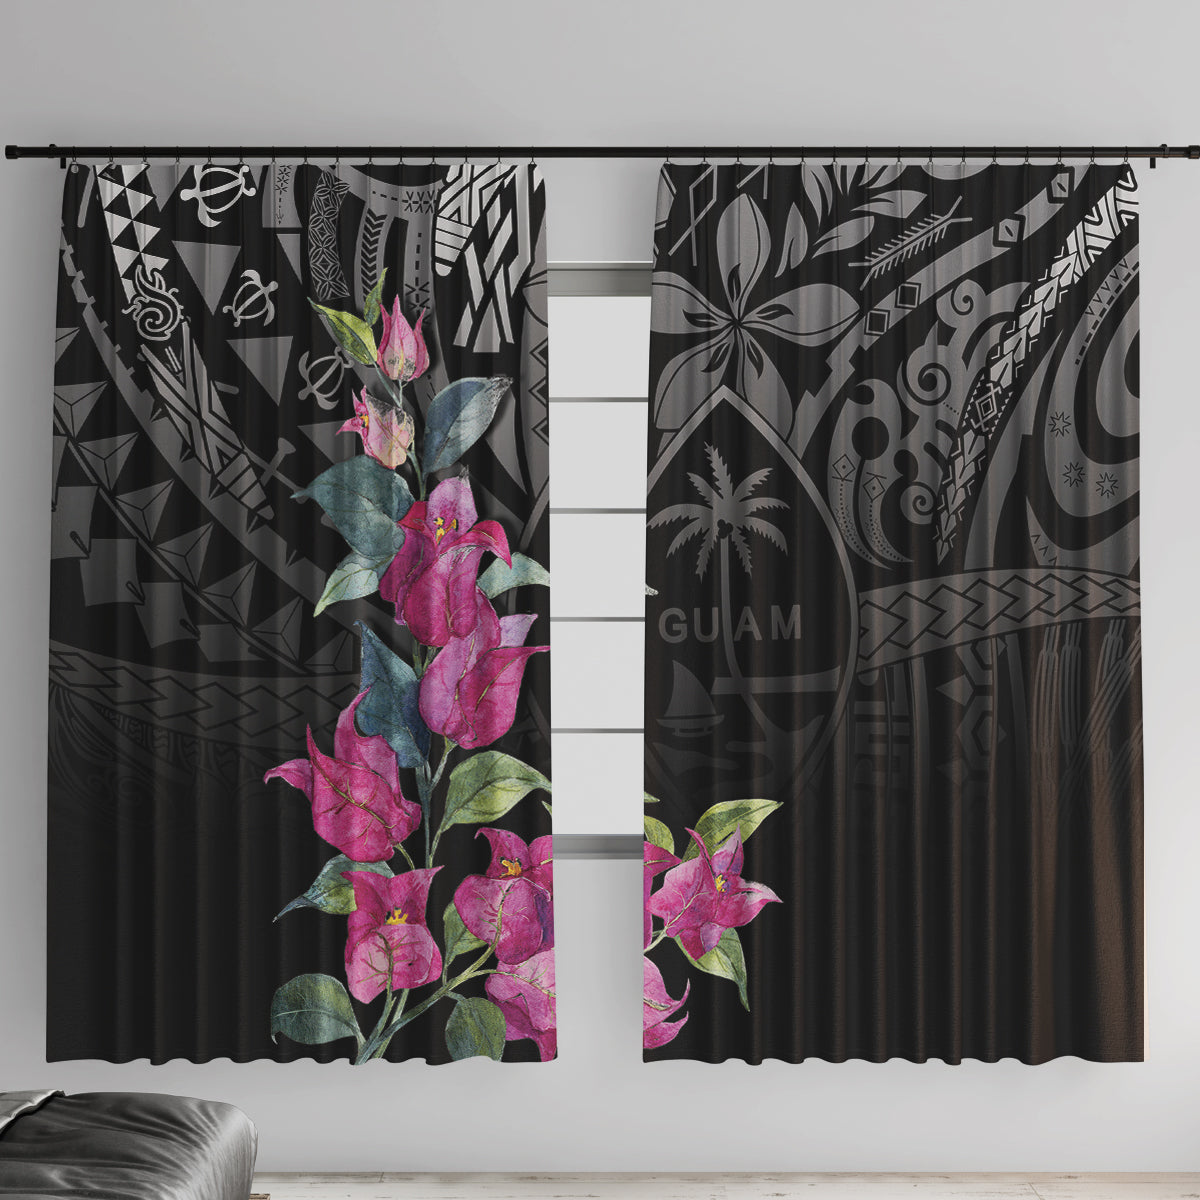 Guahan Puti Tai Nobiu Window Curtain Guam Bougainvillea Flower Art